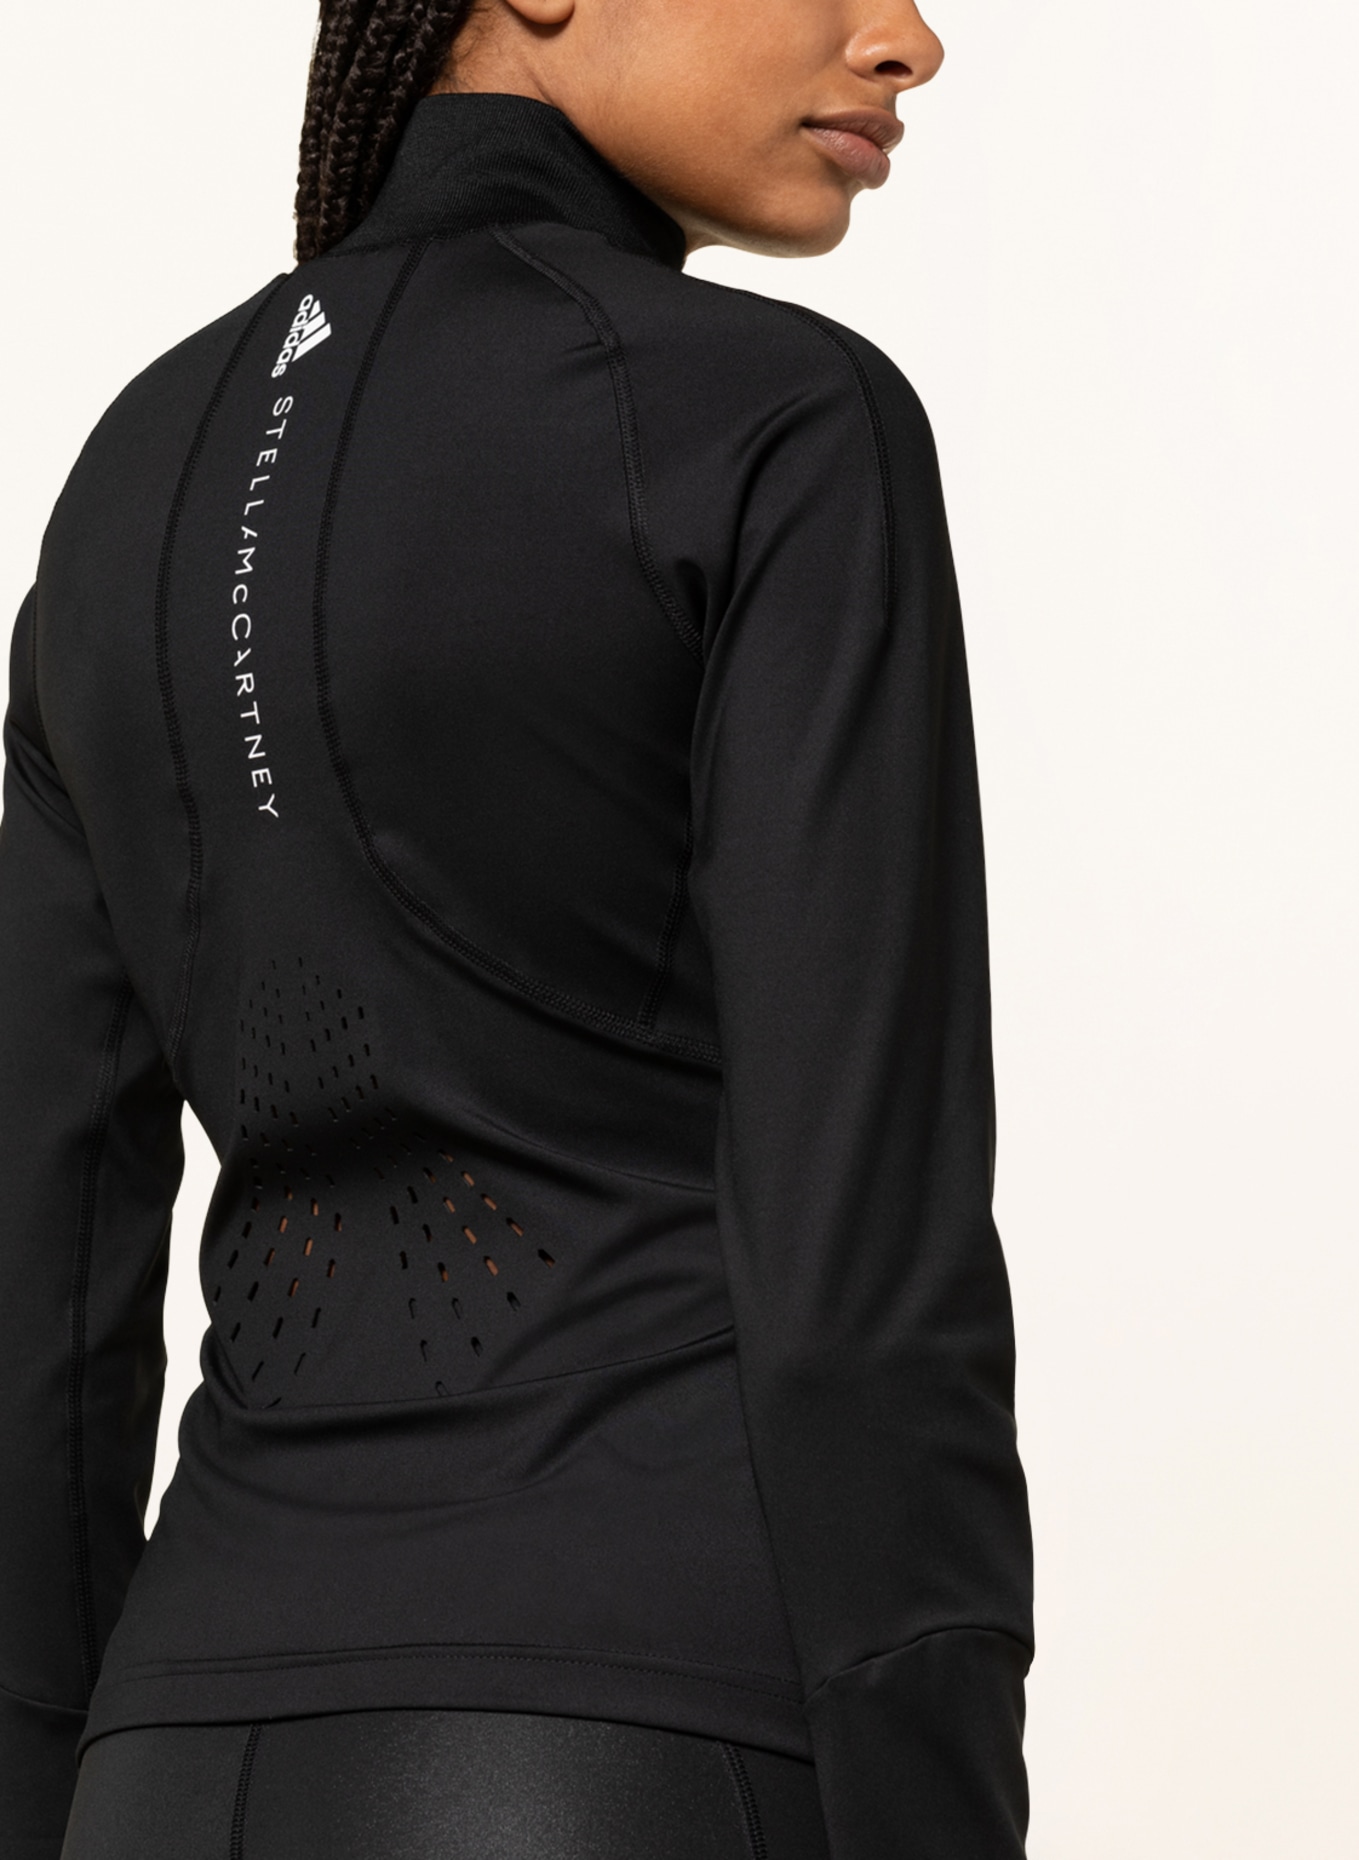 adidas by Stella McCartney Fitness jacket TRUEPURPOSE in black